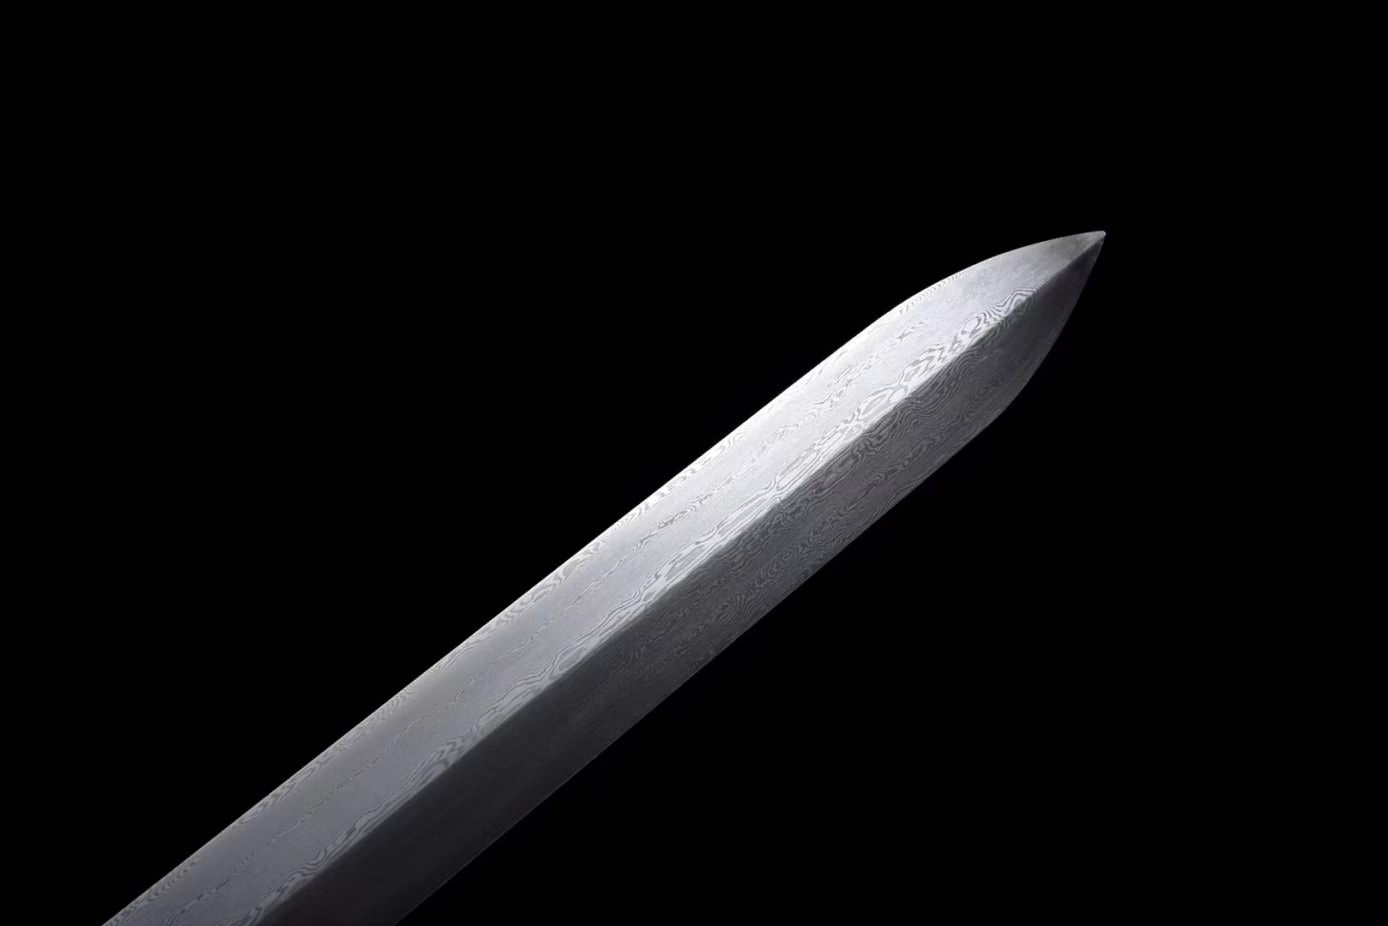 Chinese sword,Ruyi jian Swords Real Damascus Steel Blade,Blue Skin Scabbard,Alloy Fittings,LOONGSWORD